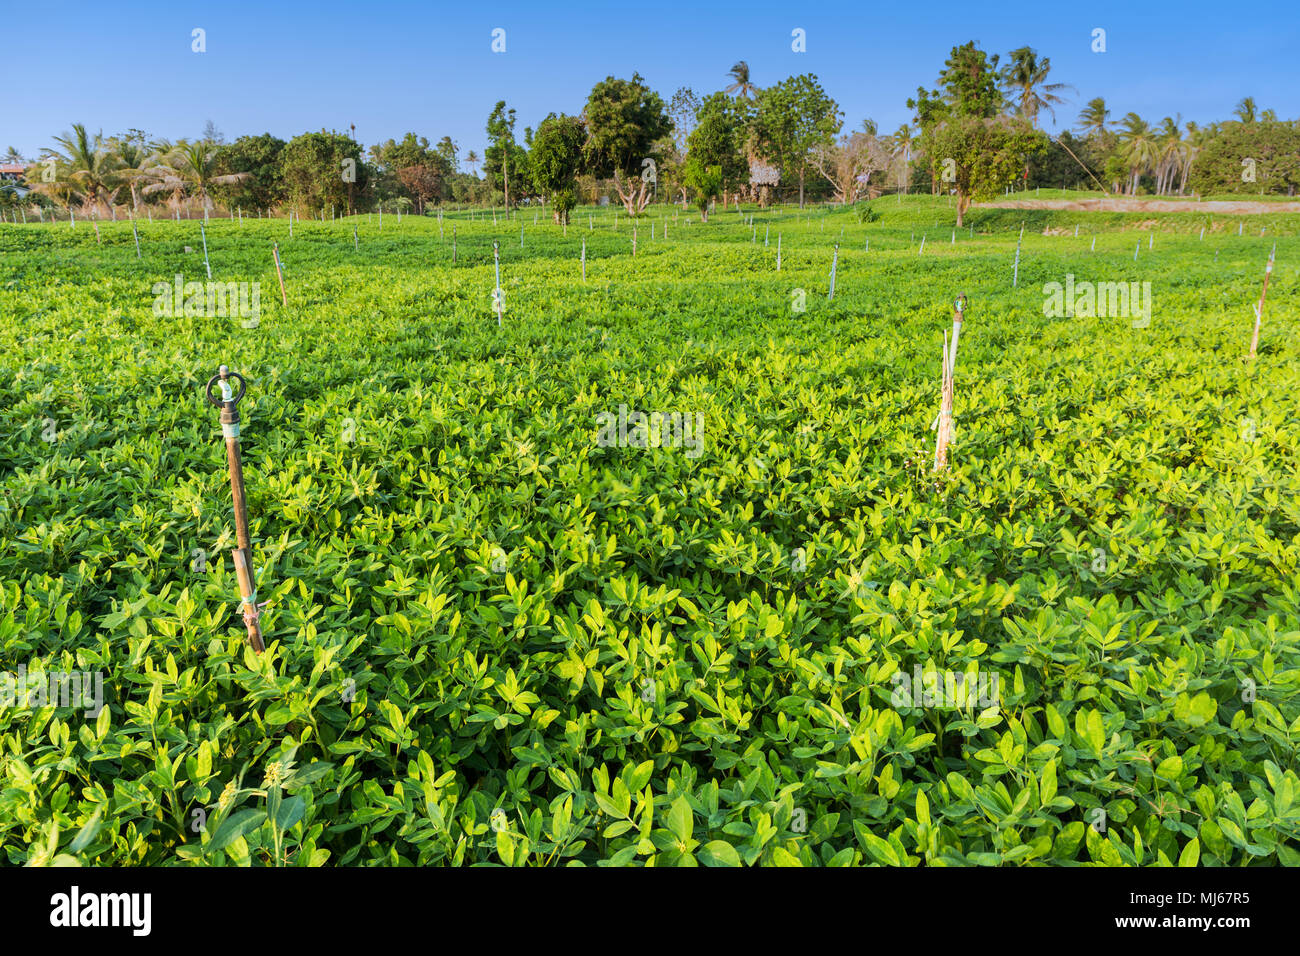 Peanut field, Groundnut field on ground in vegetable garden. Stock Photo